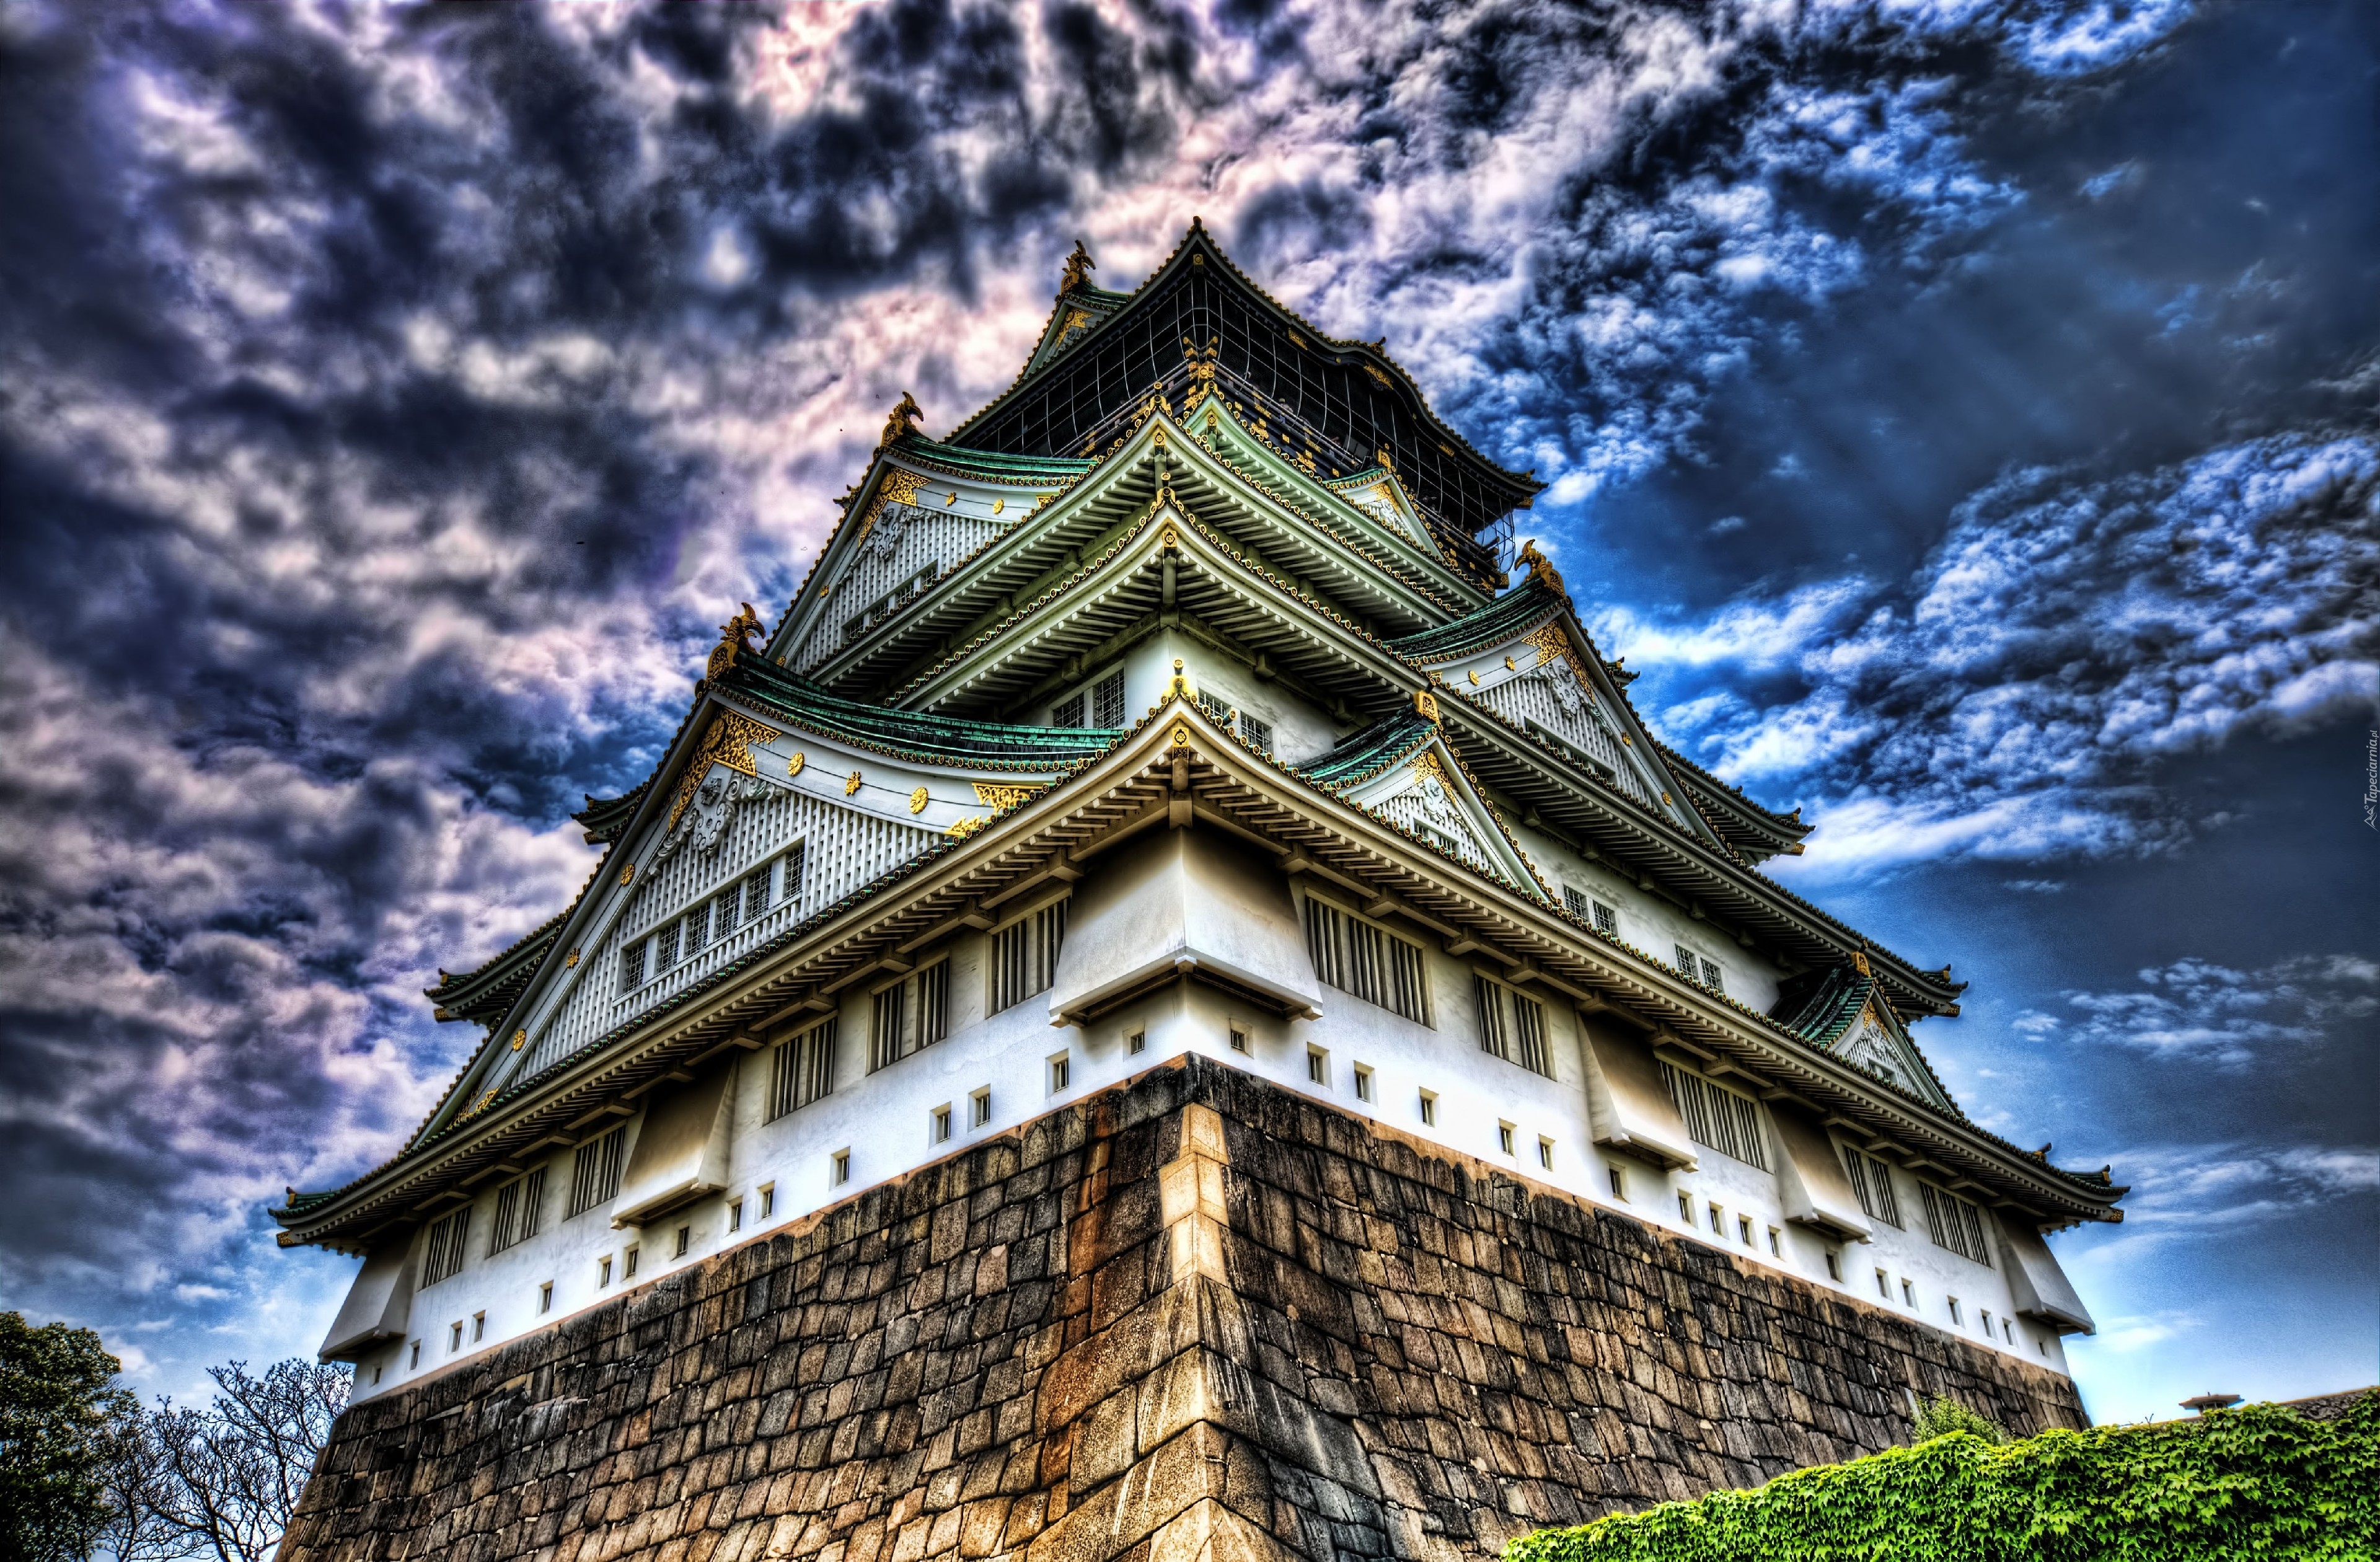 Zamek Osaka, Brokatowy Zamek, Osaka-jo, Miasto Osaka, Japonia